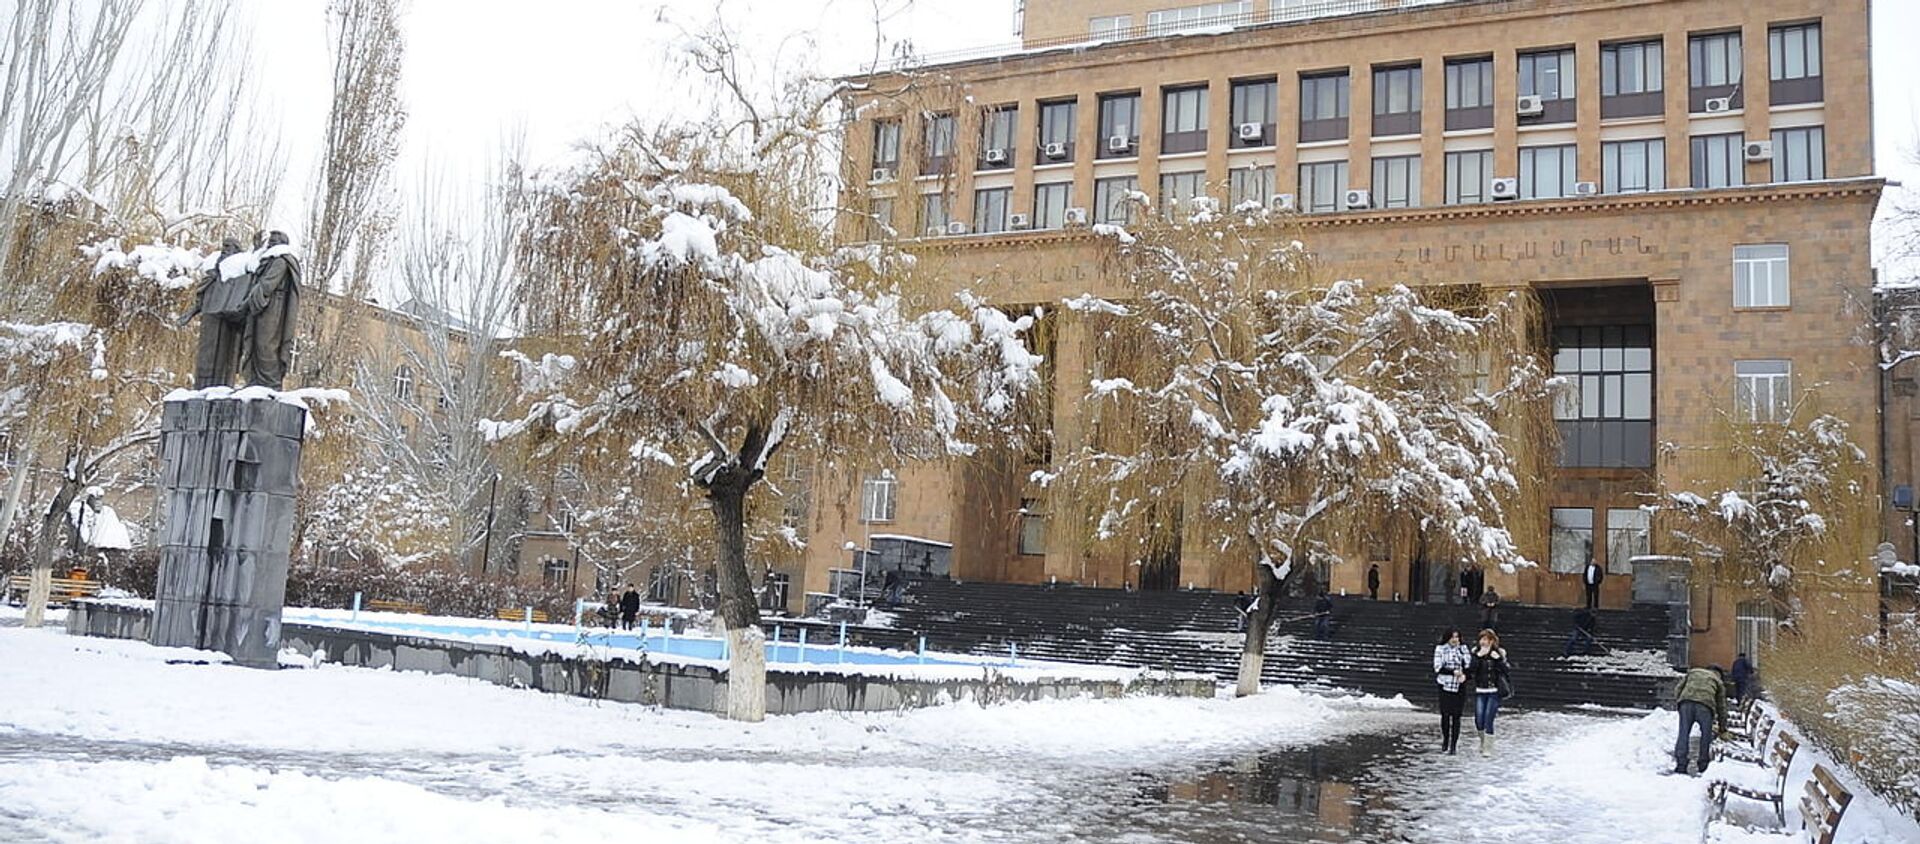 Ереванский государственный университет - Sputnik Արմենիա, 1920, 09.02.2016